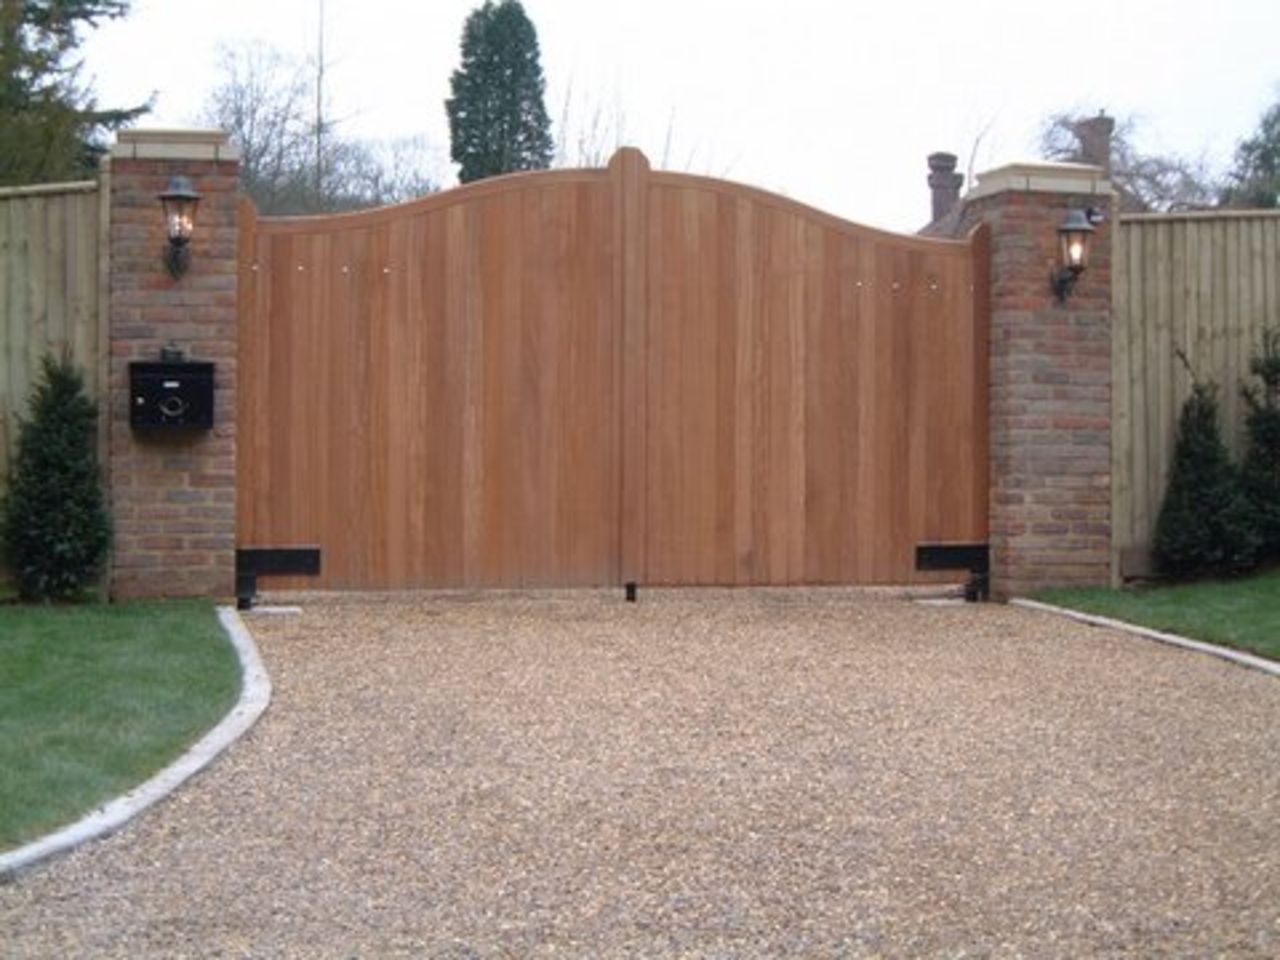 Bespoke wooden gates